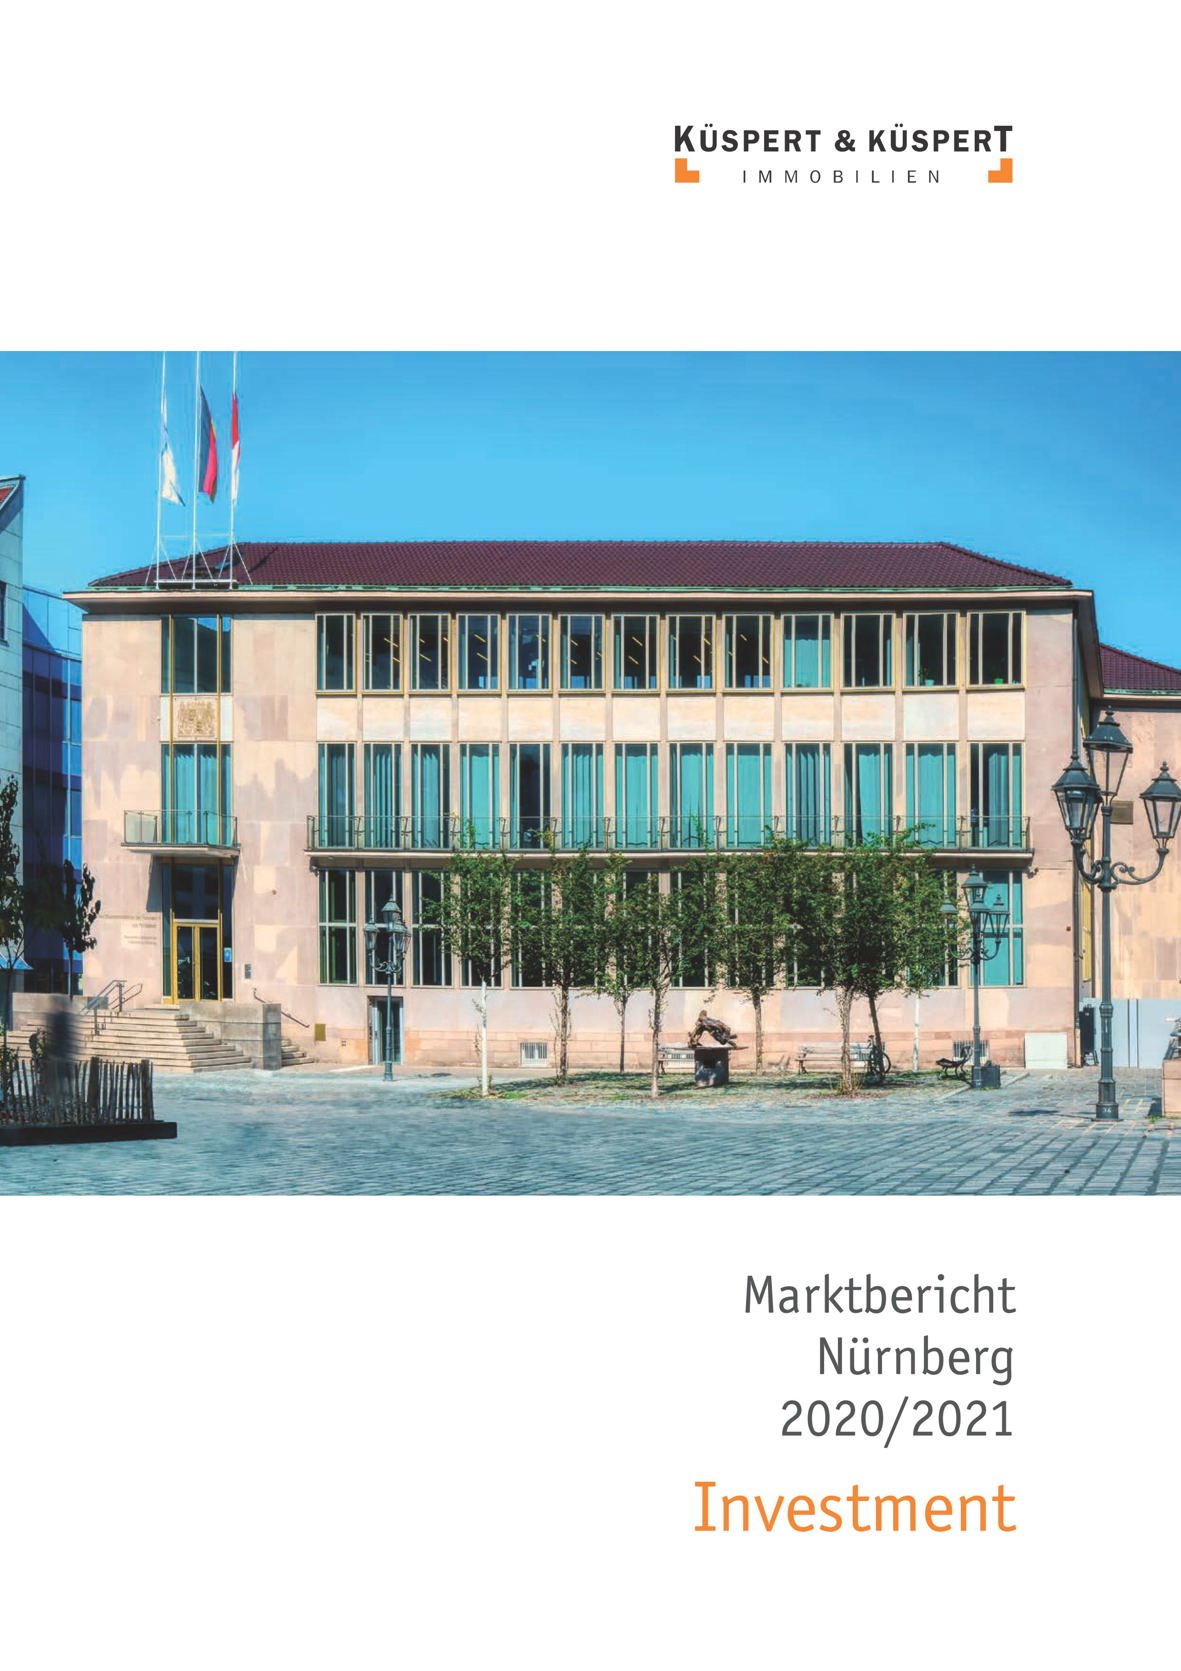 Nürnberger Immobilien-Investments vergleichsweise robust